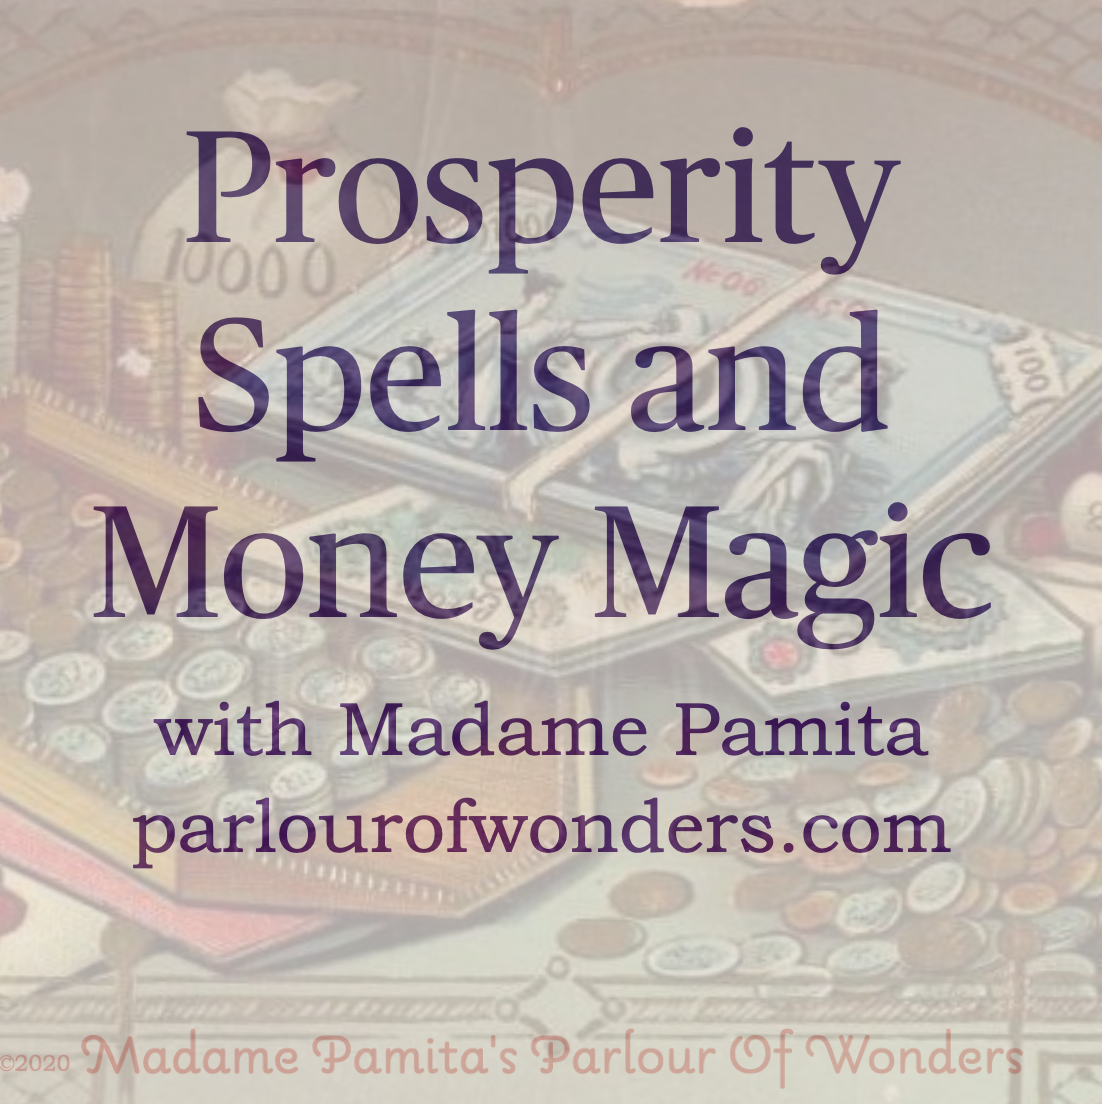 Prosperity Spells and Money Magic Workshop